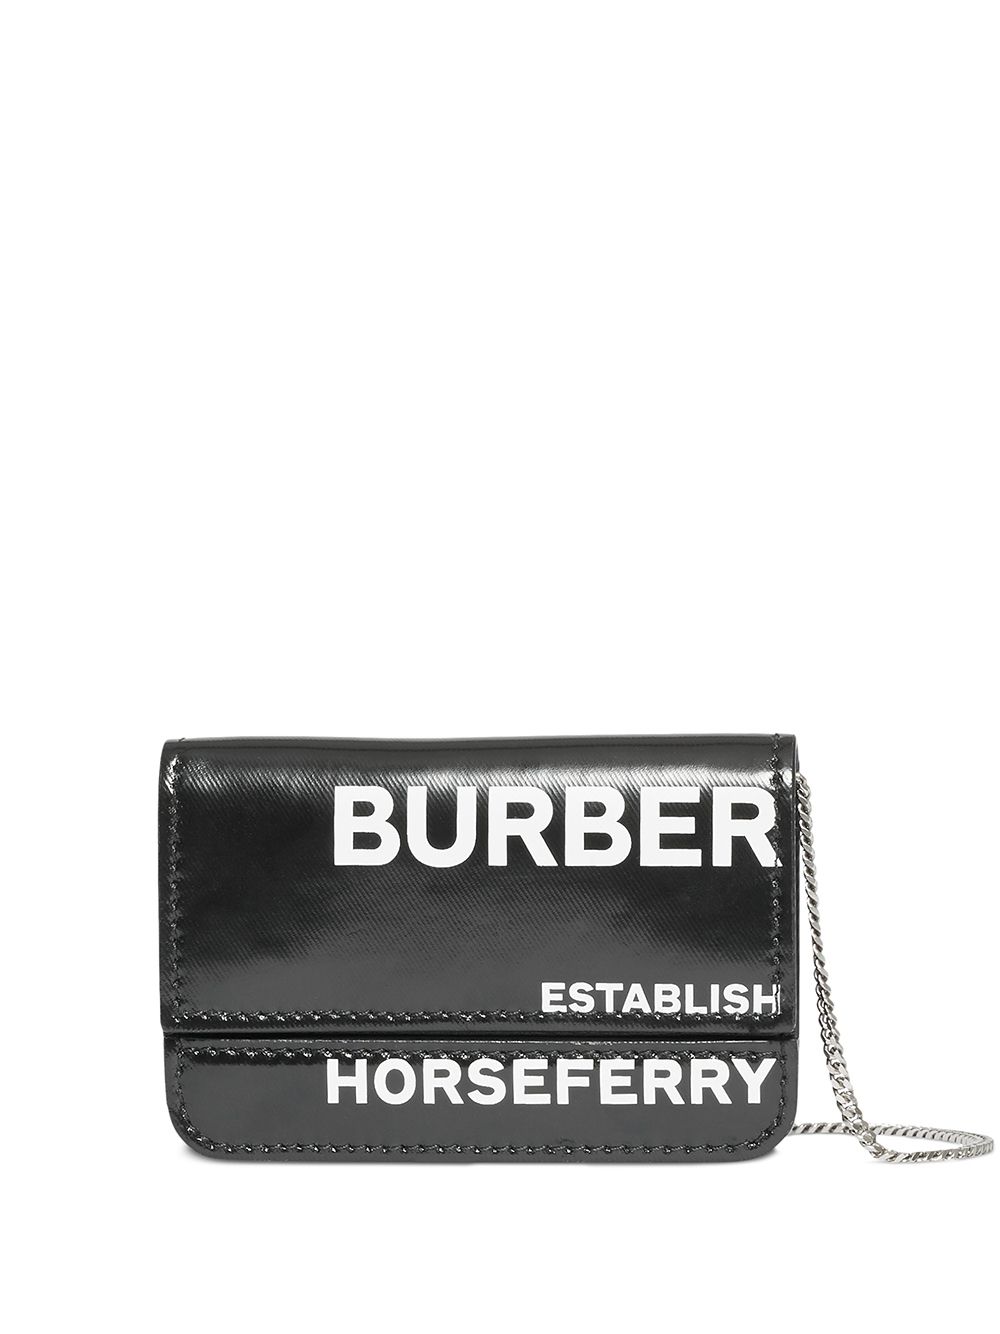 Burberry Id Card Holder Ireland, SAVE 45% 